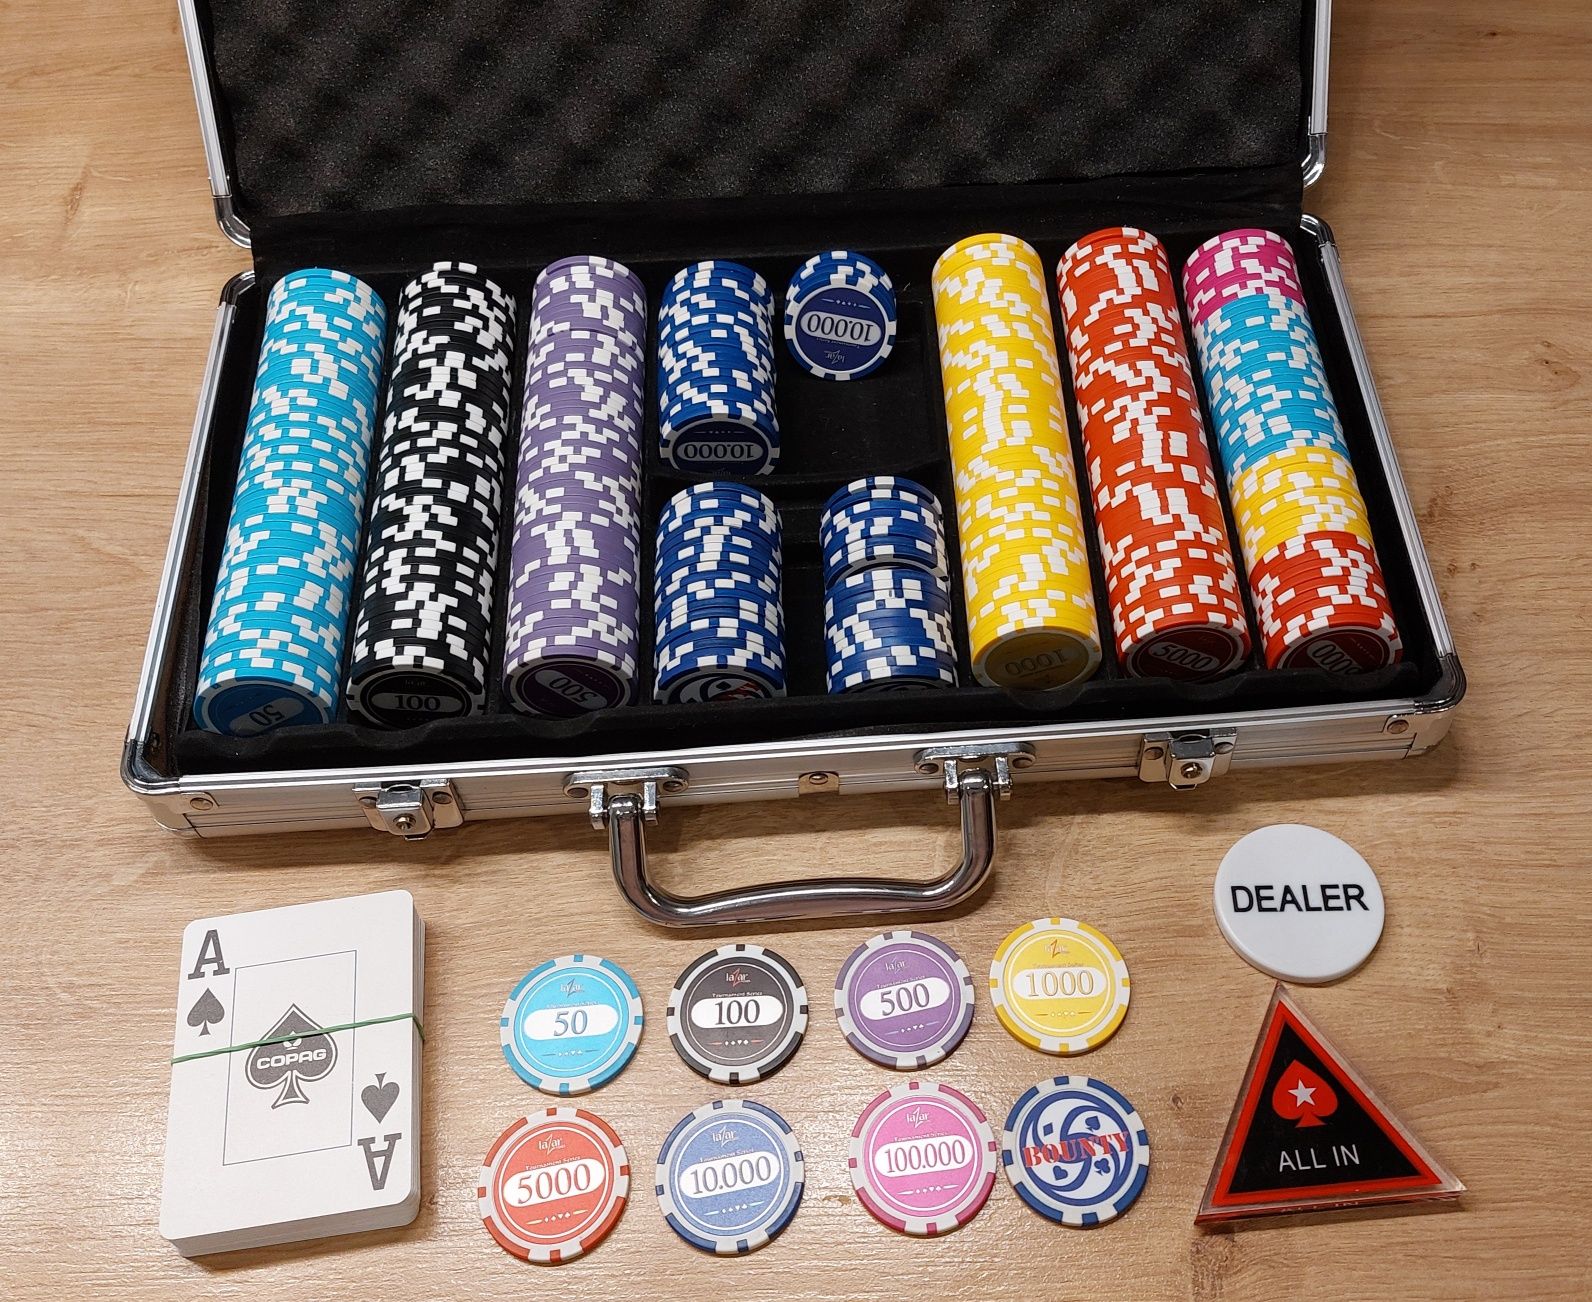 Equip tool patrol Zestaw Poker 365 żetonów Dealer All in Karty Toruń • OLX.pl